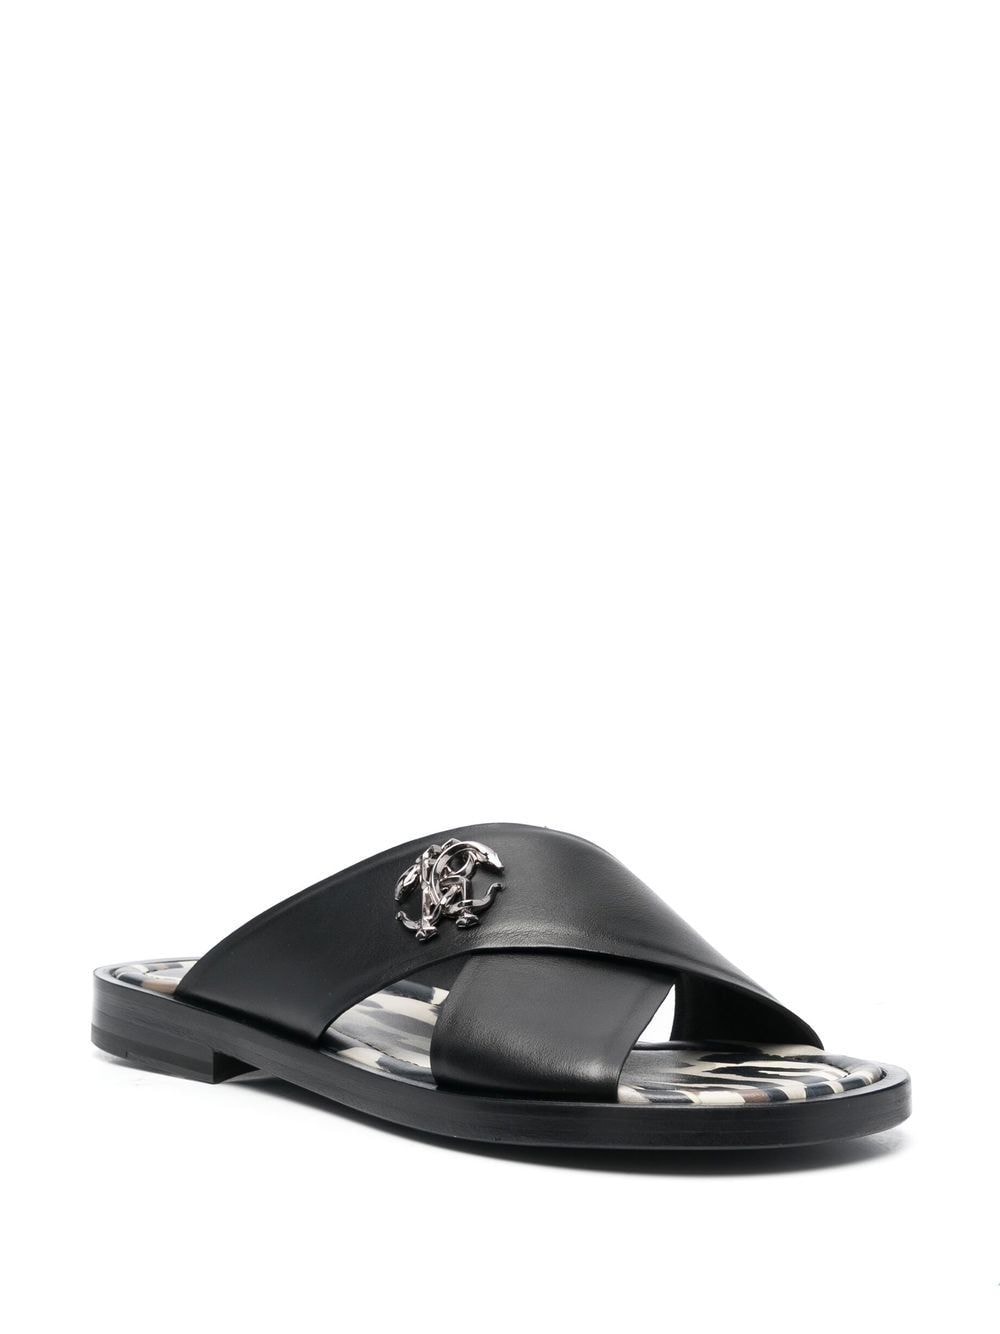 Roberto Cavalli criss-cross Leather Sandals - Farfetch